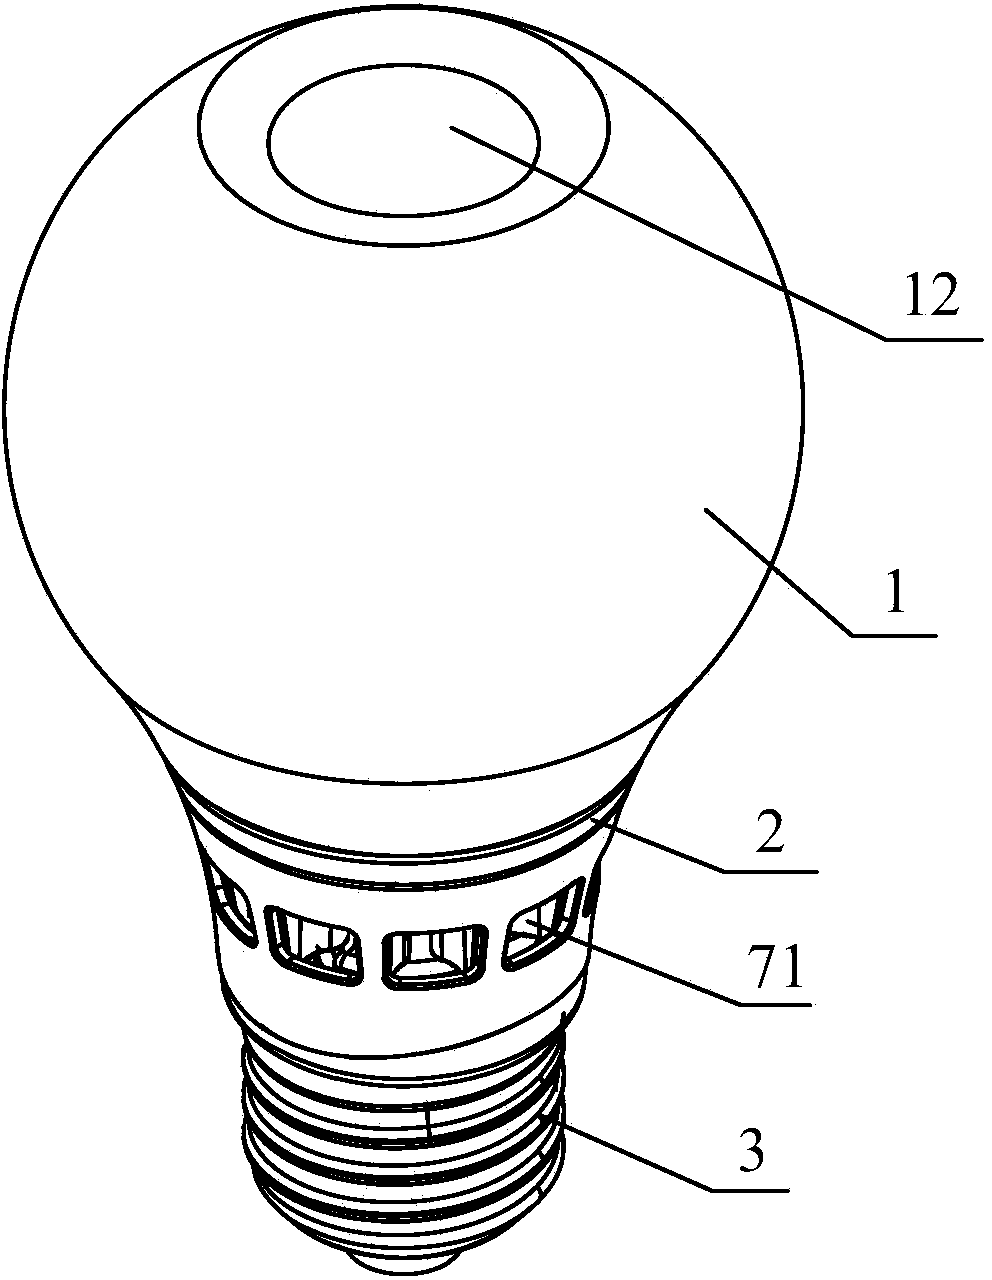 LED (Light Emitting Diode) bubble lamp